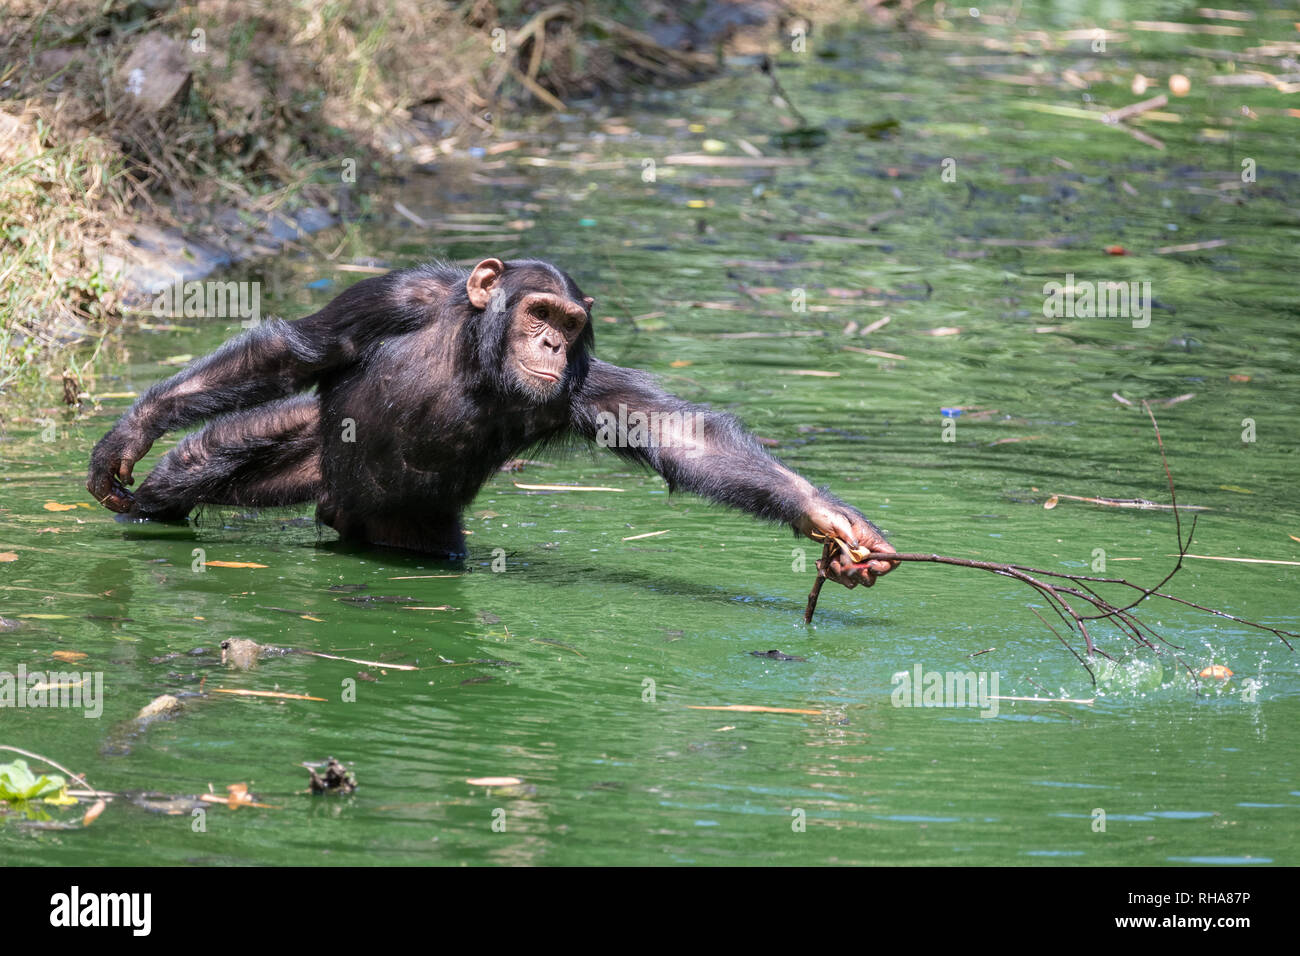 Male chimpanzee (Pan troglodytes) fishing with branch in zoo pond, Entebbe, Uganda Stock Photo